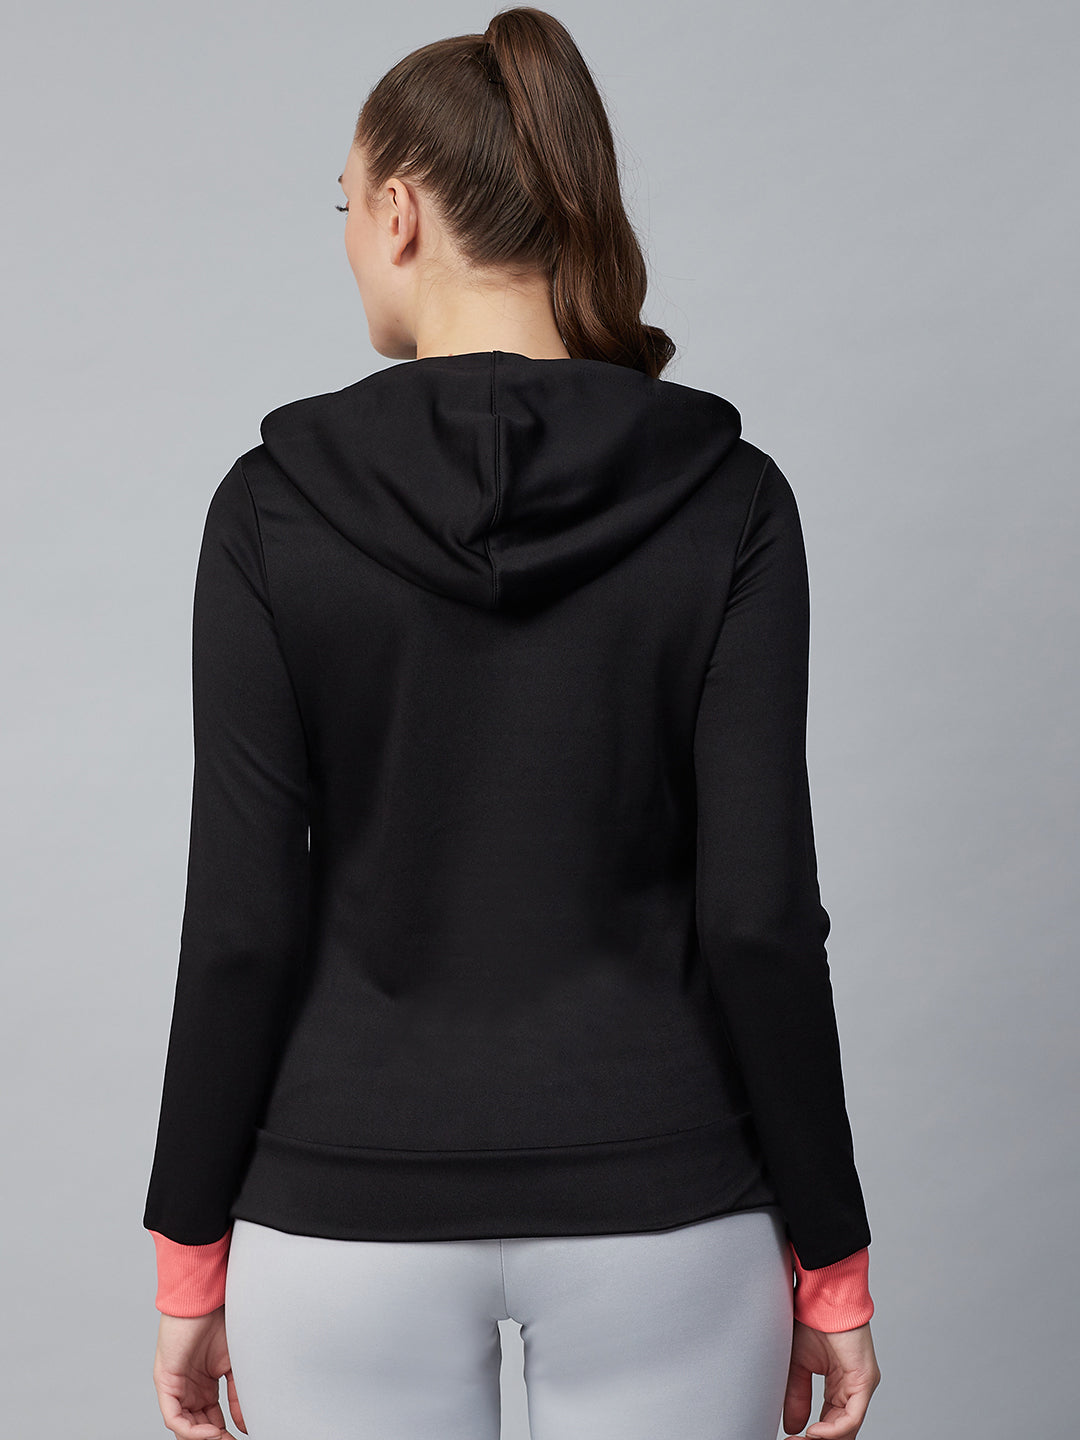 Alcis Women Black Solid Hooded Sweatshirt